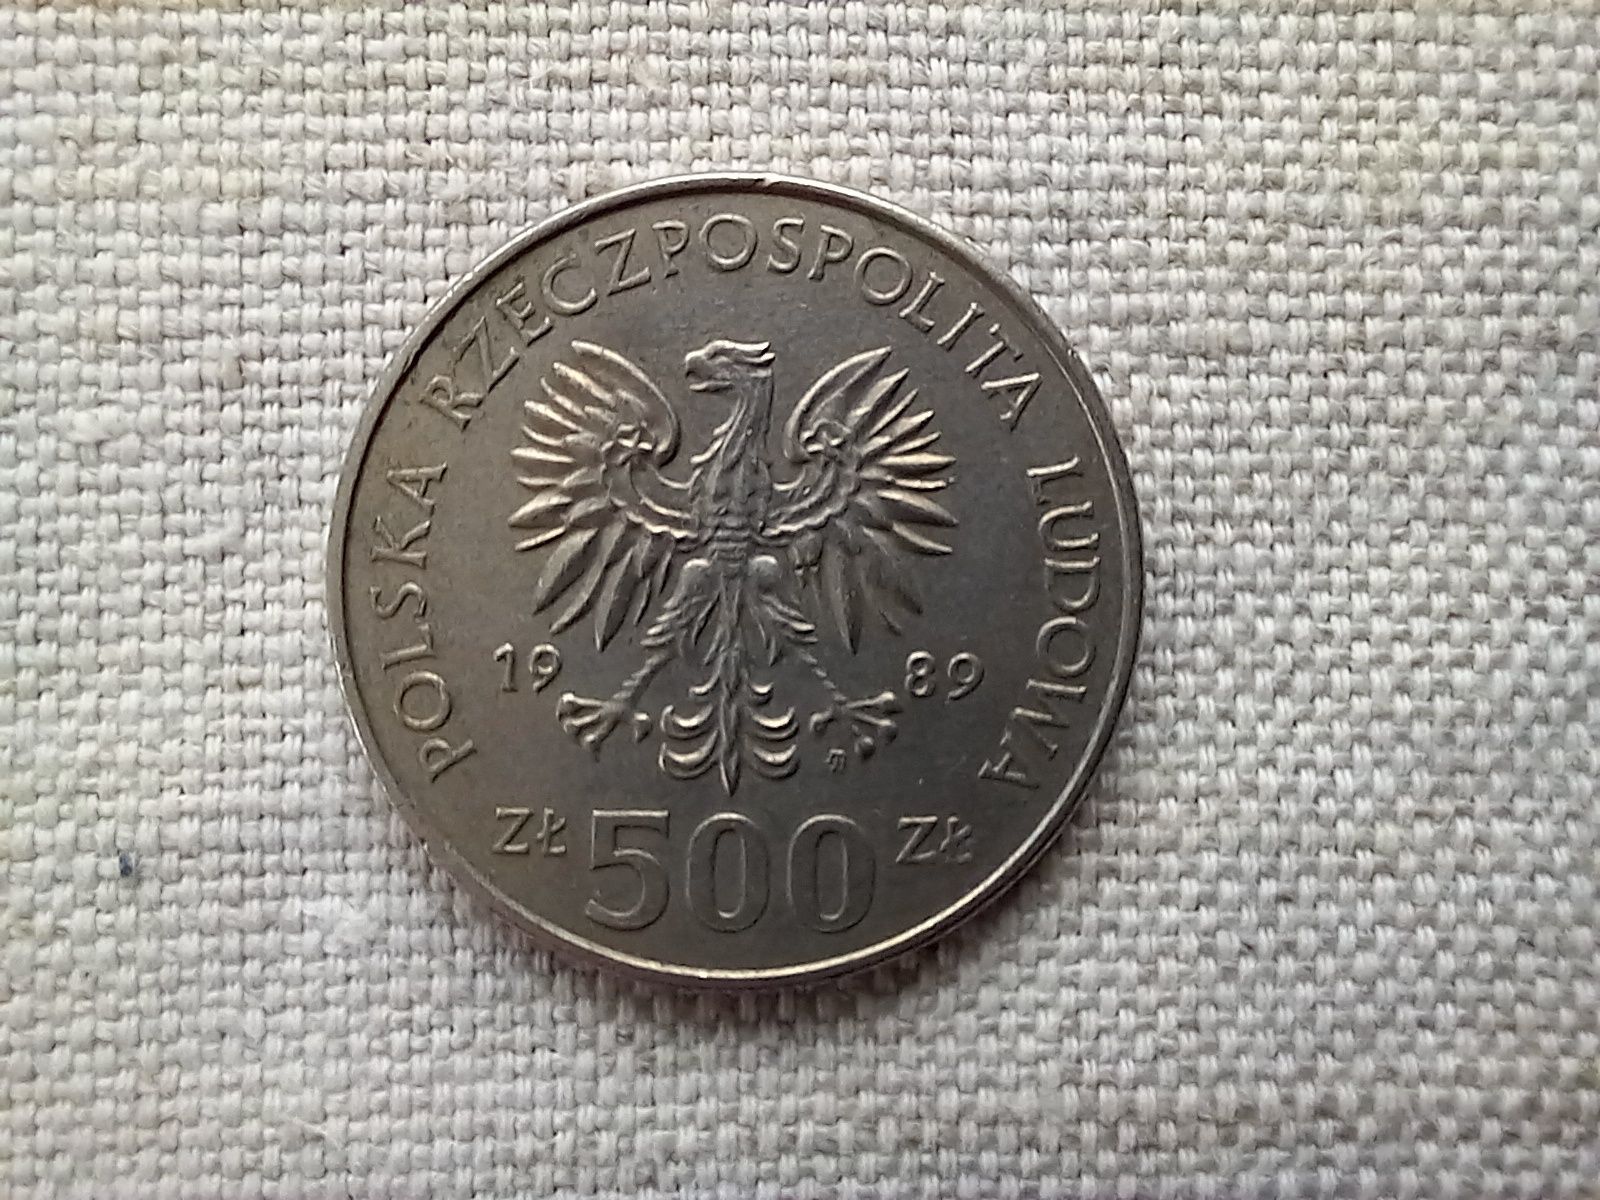 Moneta 500zł z 1989r